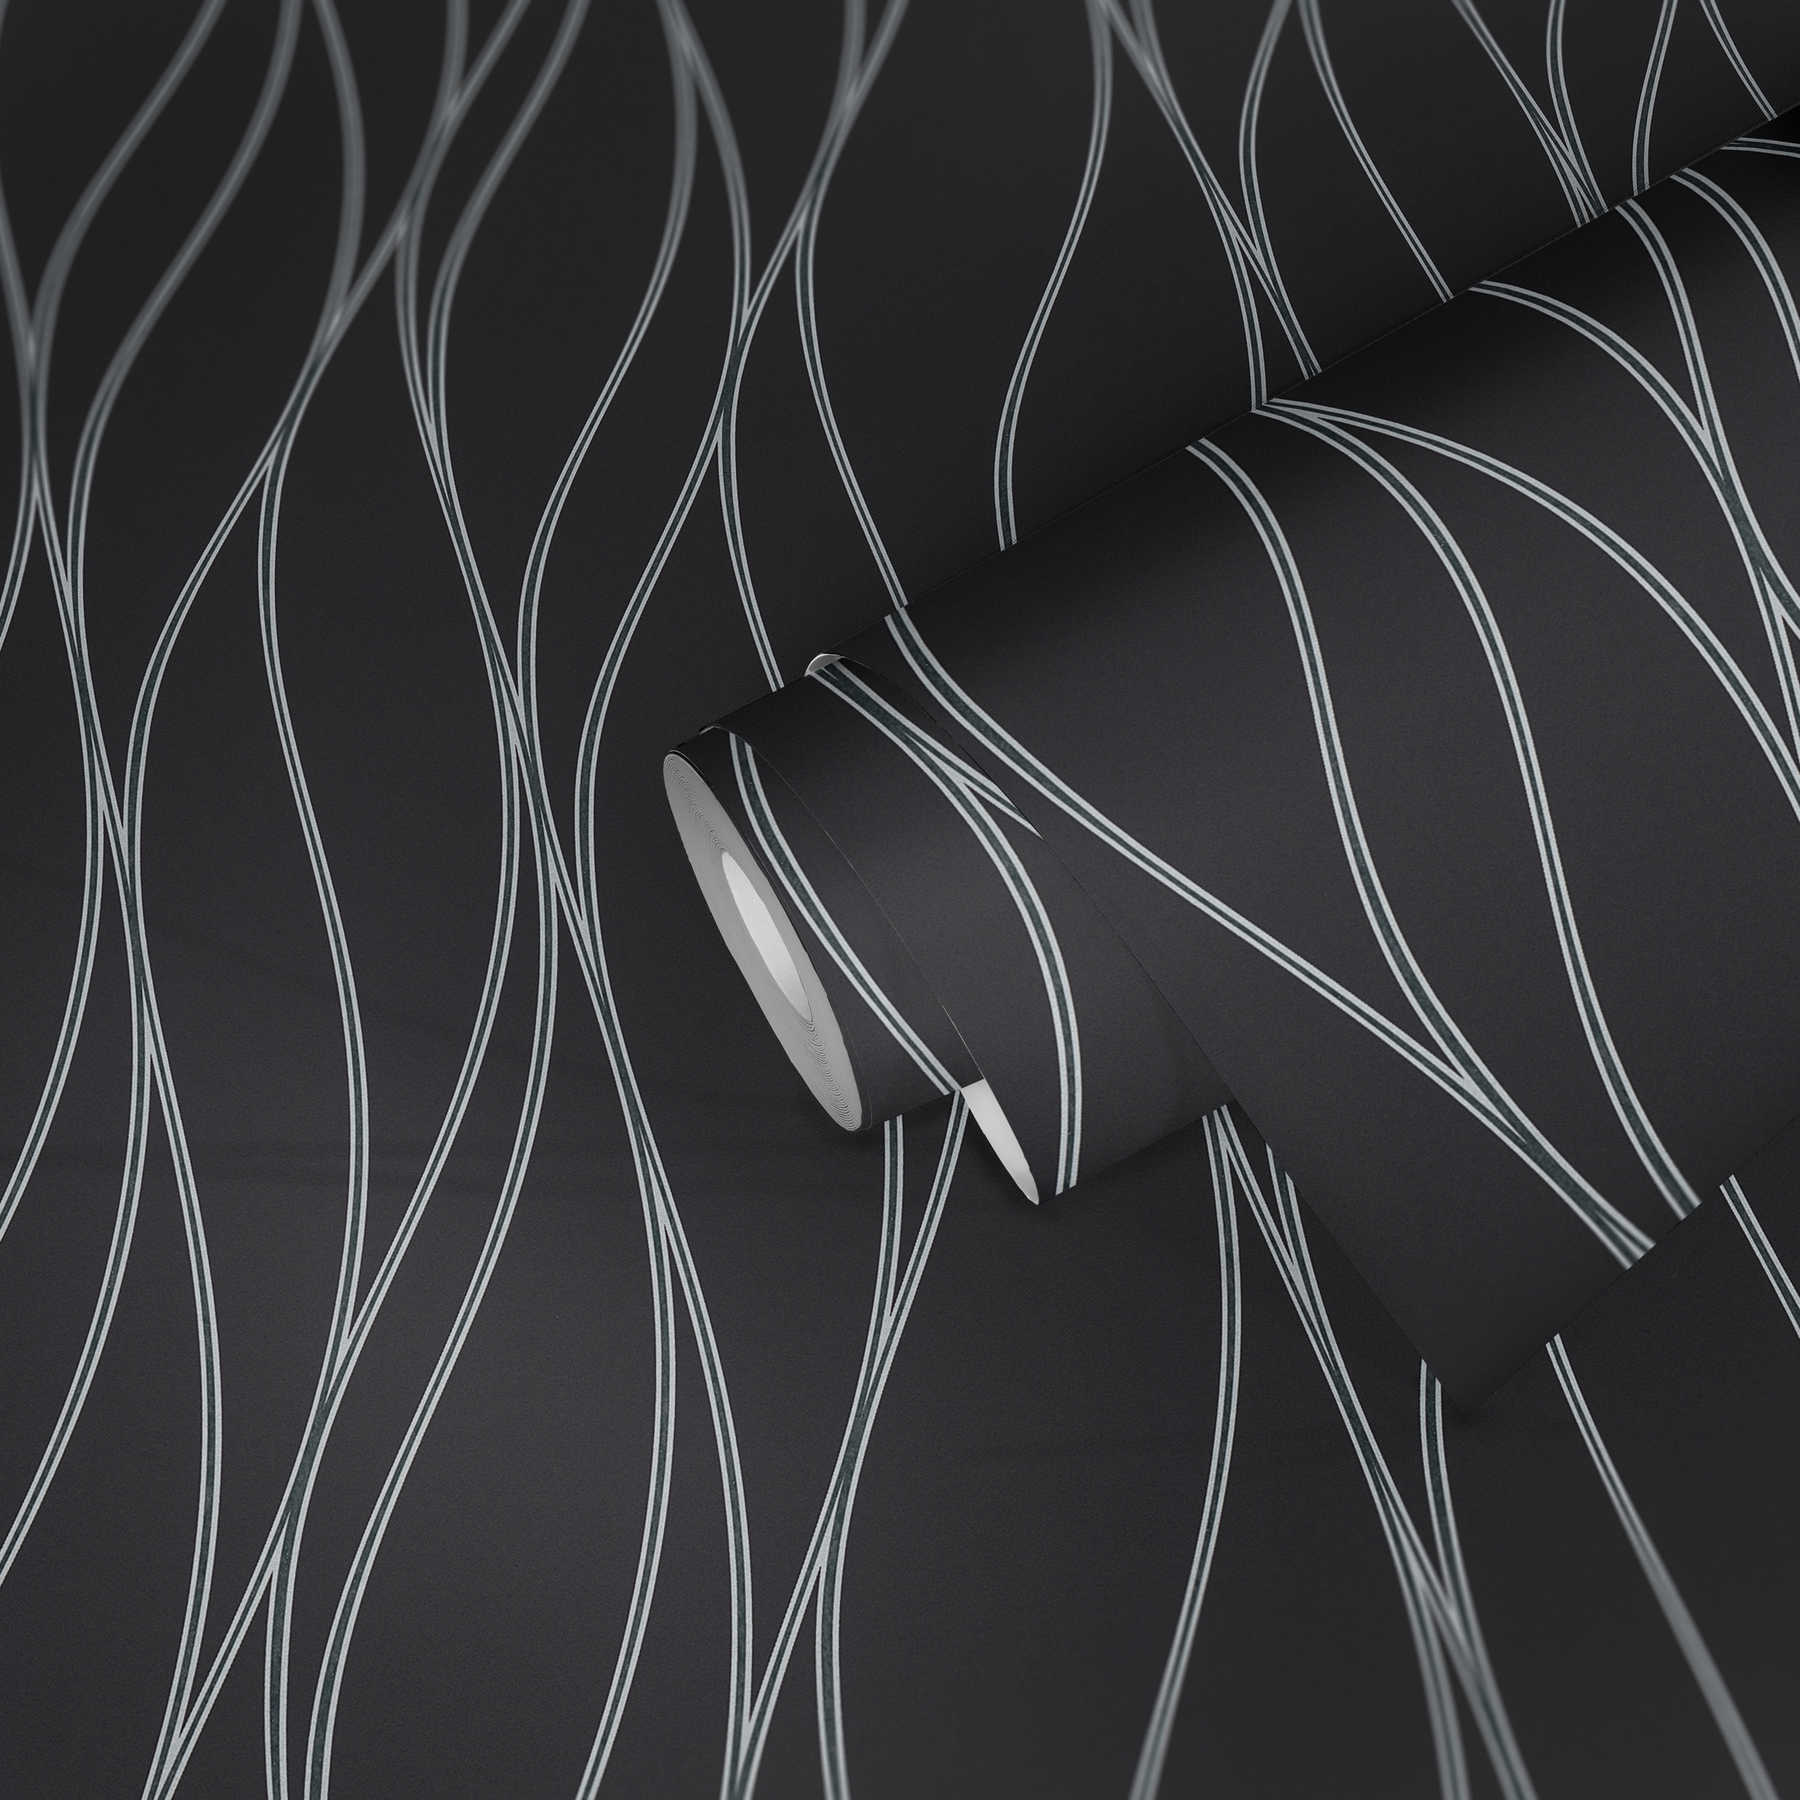             Wallpaper wavy lines vertical, metallic effect - black, silver, grey
        